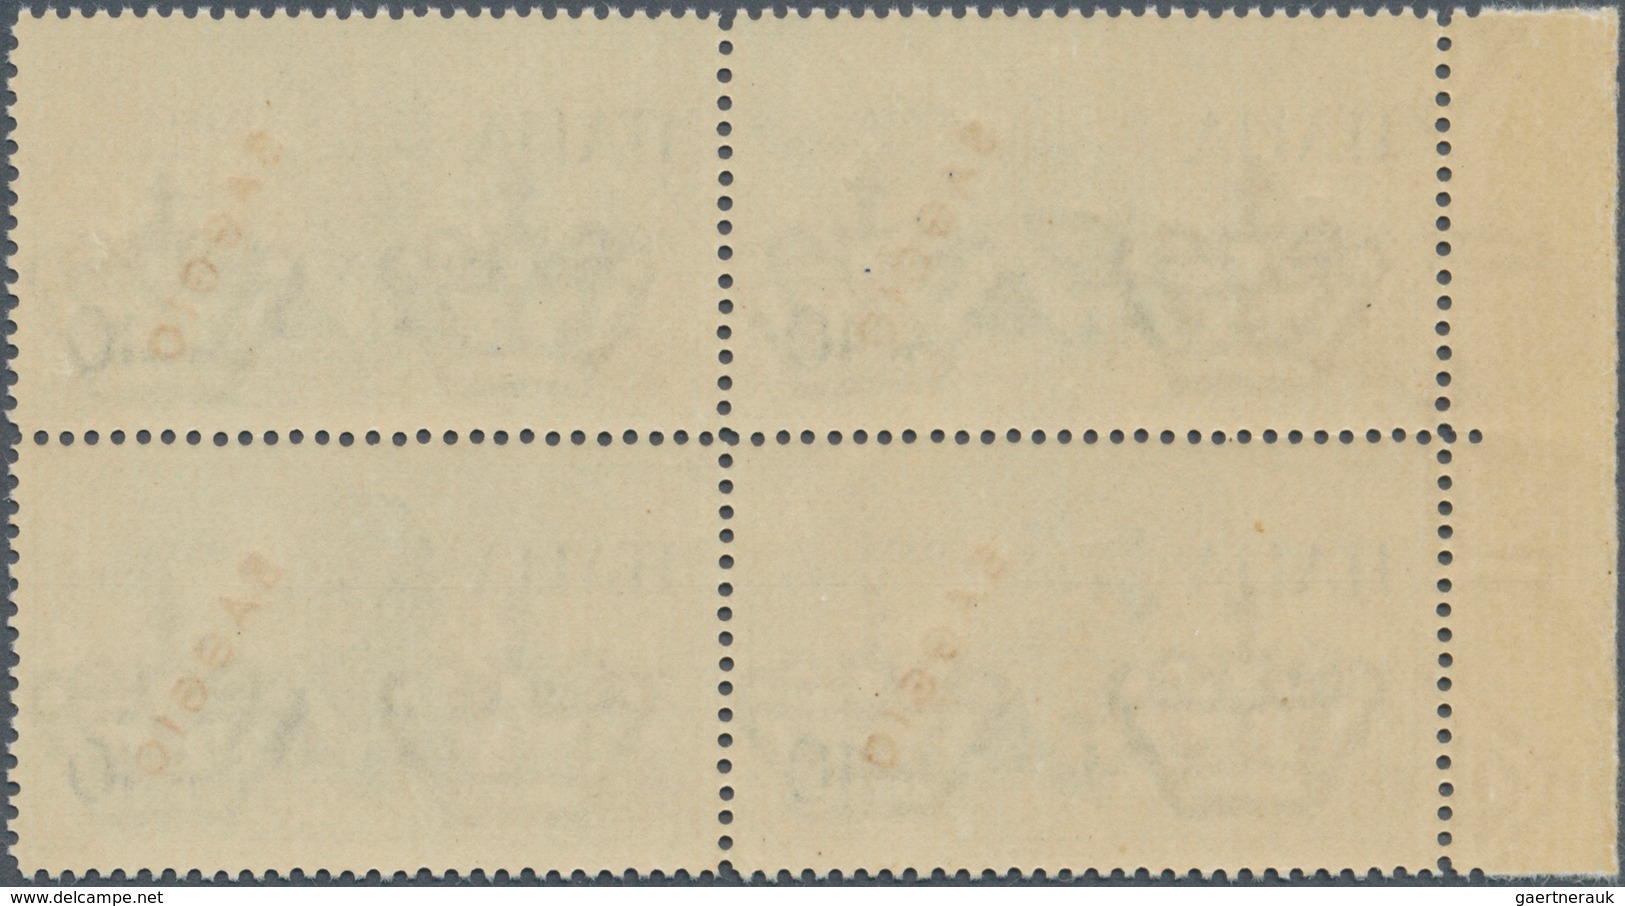 01000 Italien - Dienstmarken: 1934; Official Stamp For The Flight Rome-Magadiscio In Block Of Four With Ov - Dienstzegels